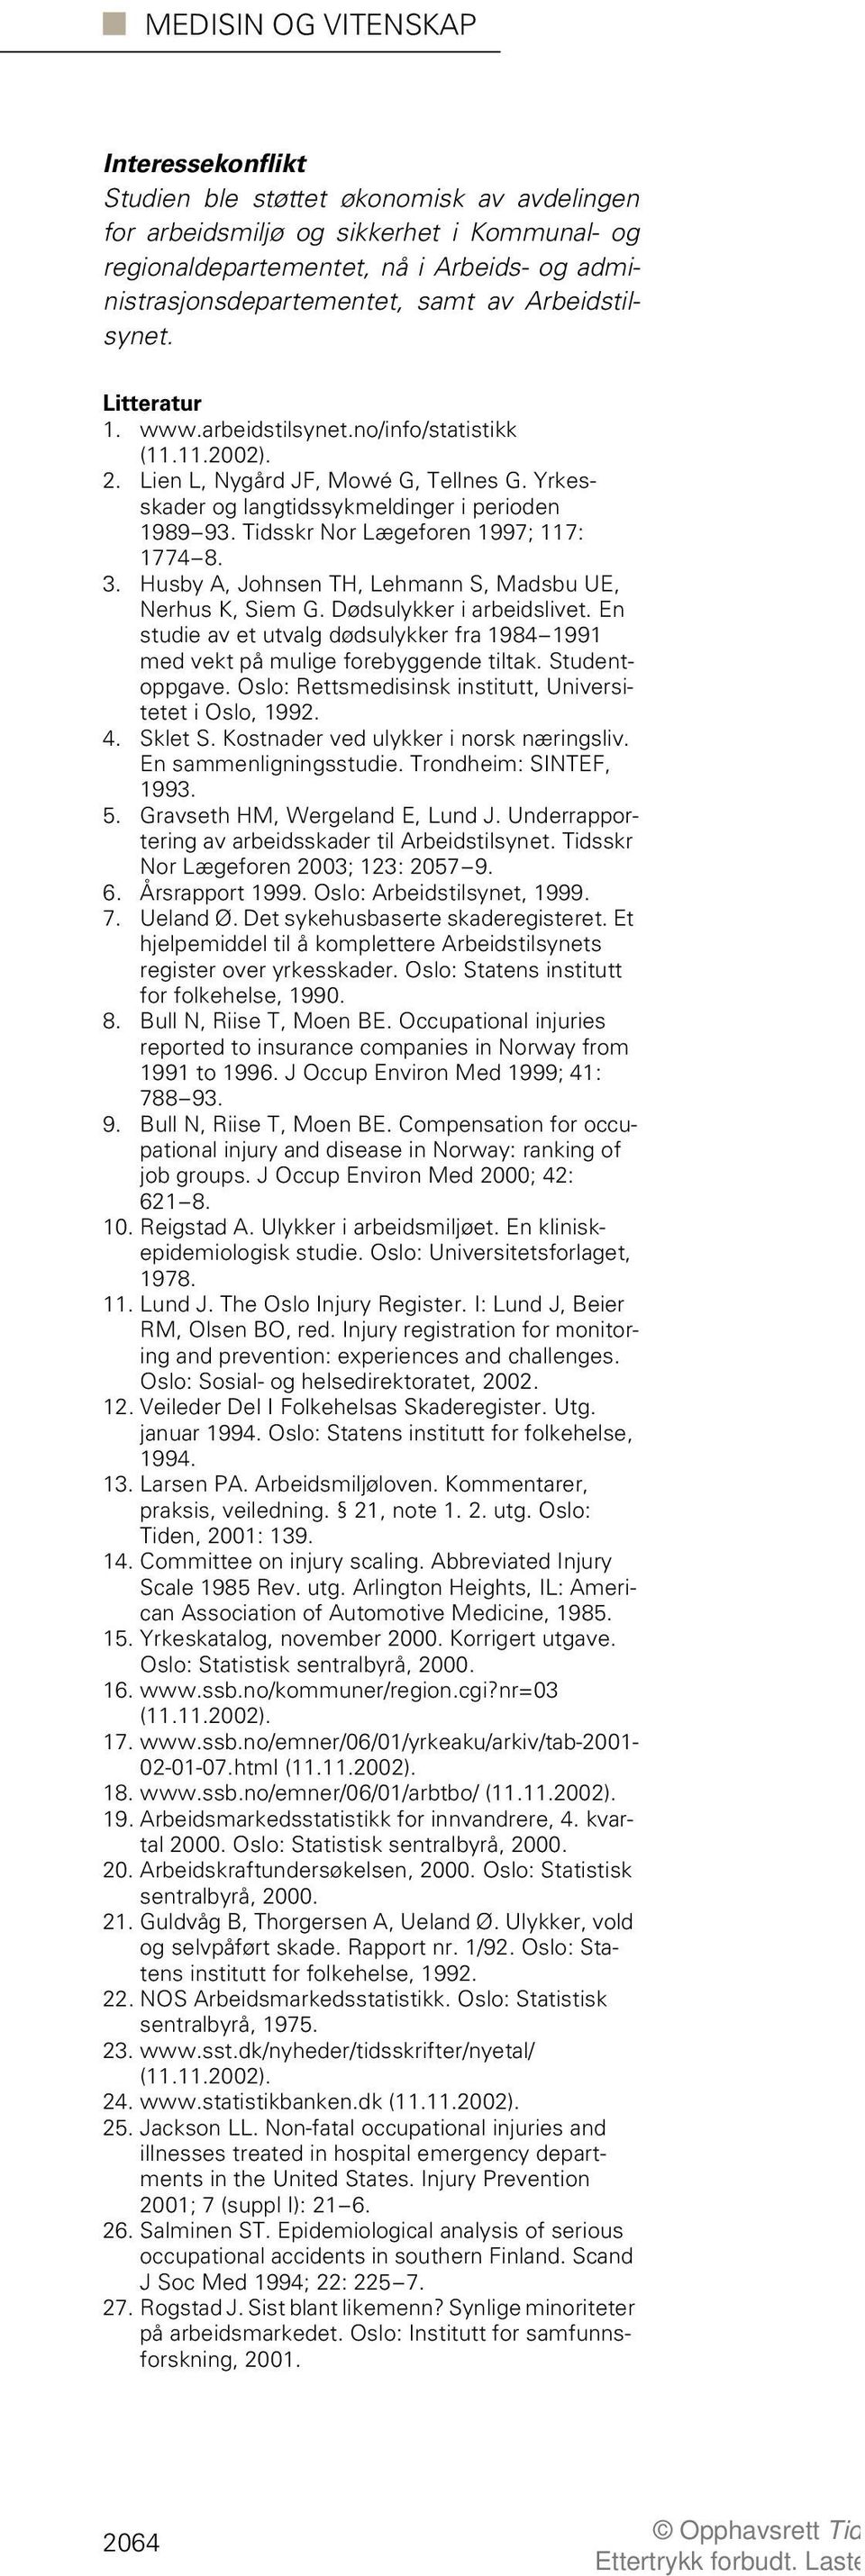 Tidsskr Nor Lægeforen 1997; 117: 1774 8. 3. Husby A, Johnsen TH, Lehmann S, Madsbu UE, Nerhus K, Siem G. Dødsulykker i arbeidslivet.